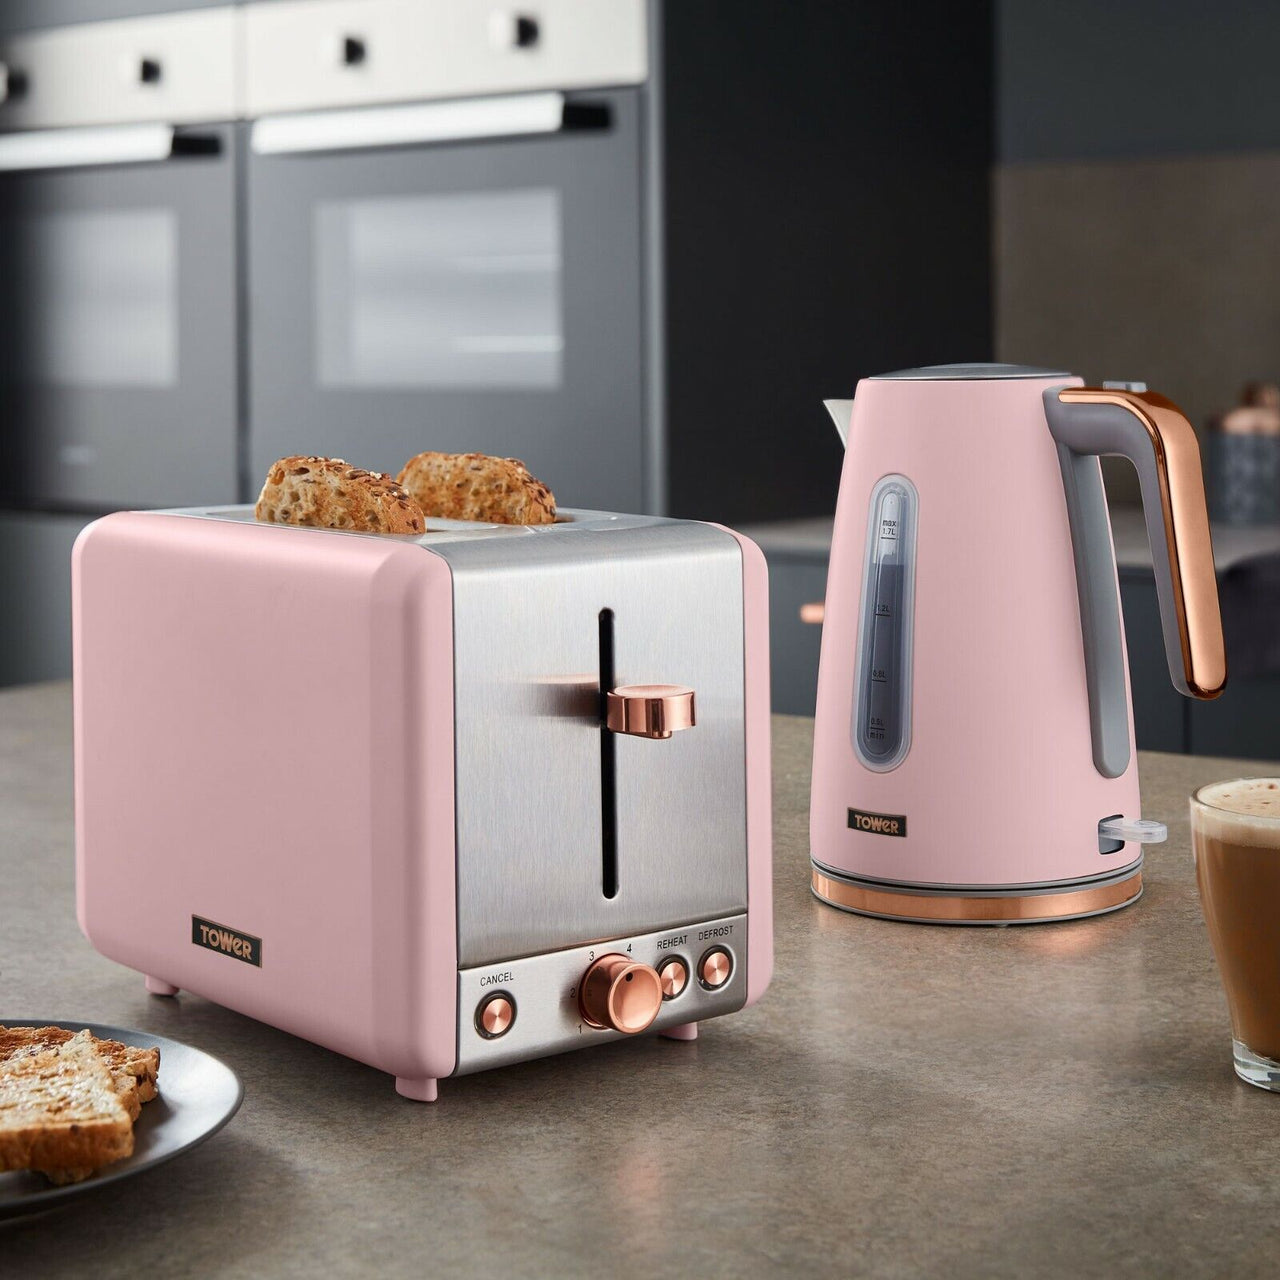 Tower Cavaletto 1.7L Jug Kettle & 2 Slice Toaster Kitchen Set Pink & Rose Gold